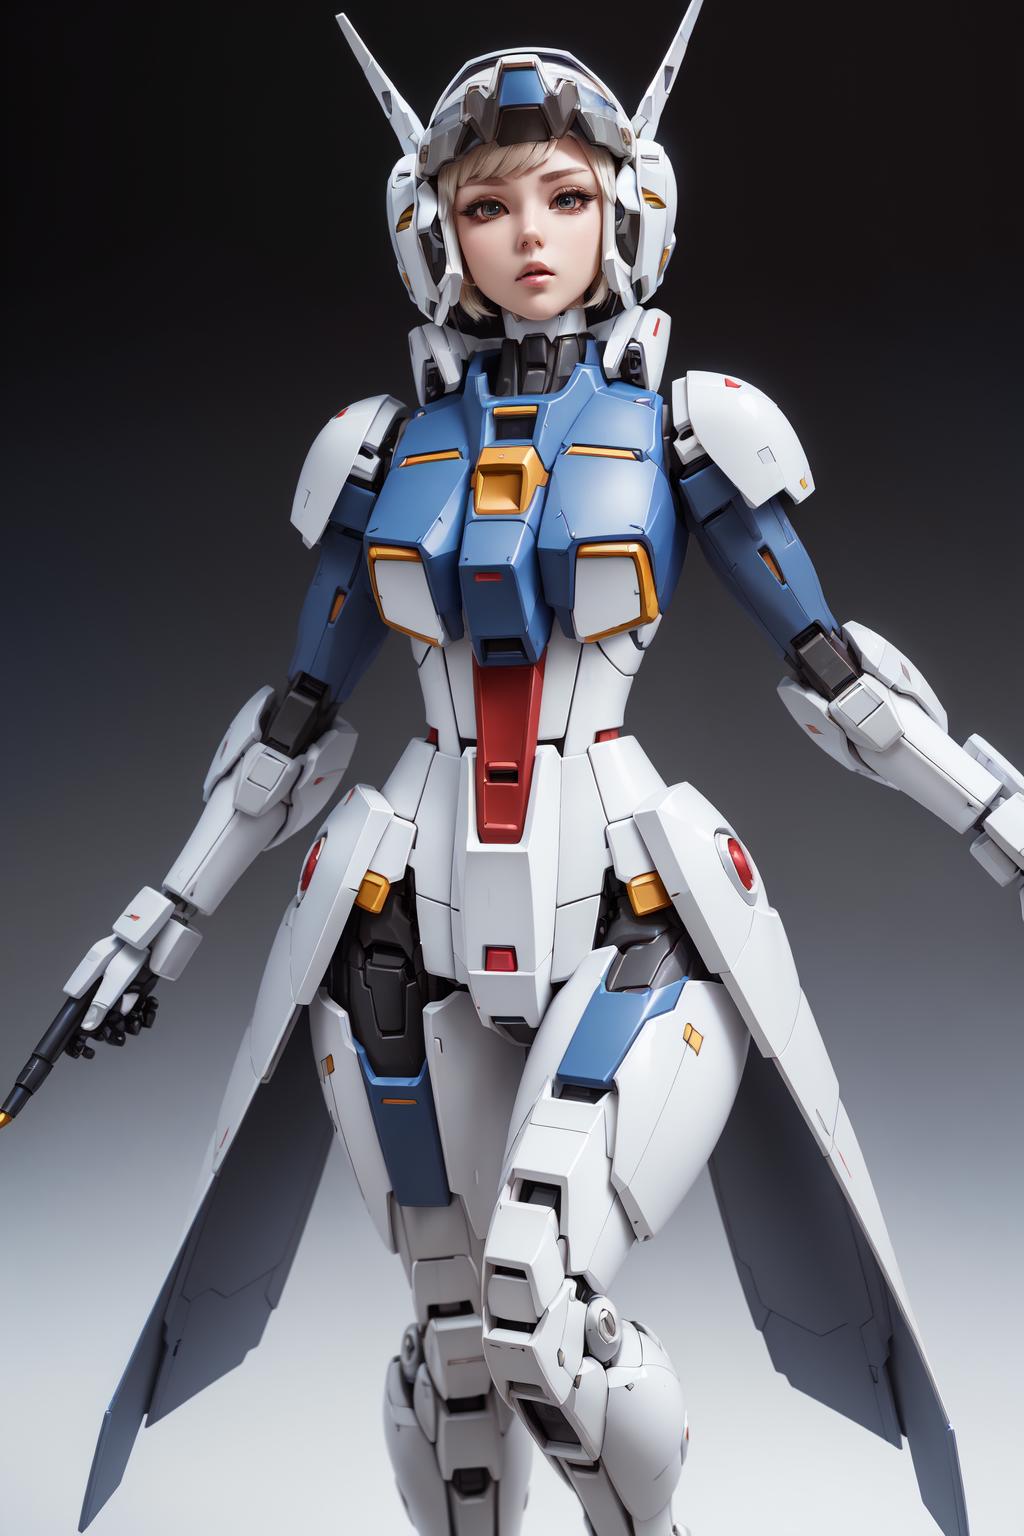 Gundam RX78-2 outfit style 高达RX78-2外观风格 image by pigineer